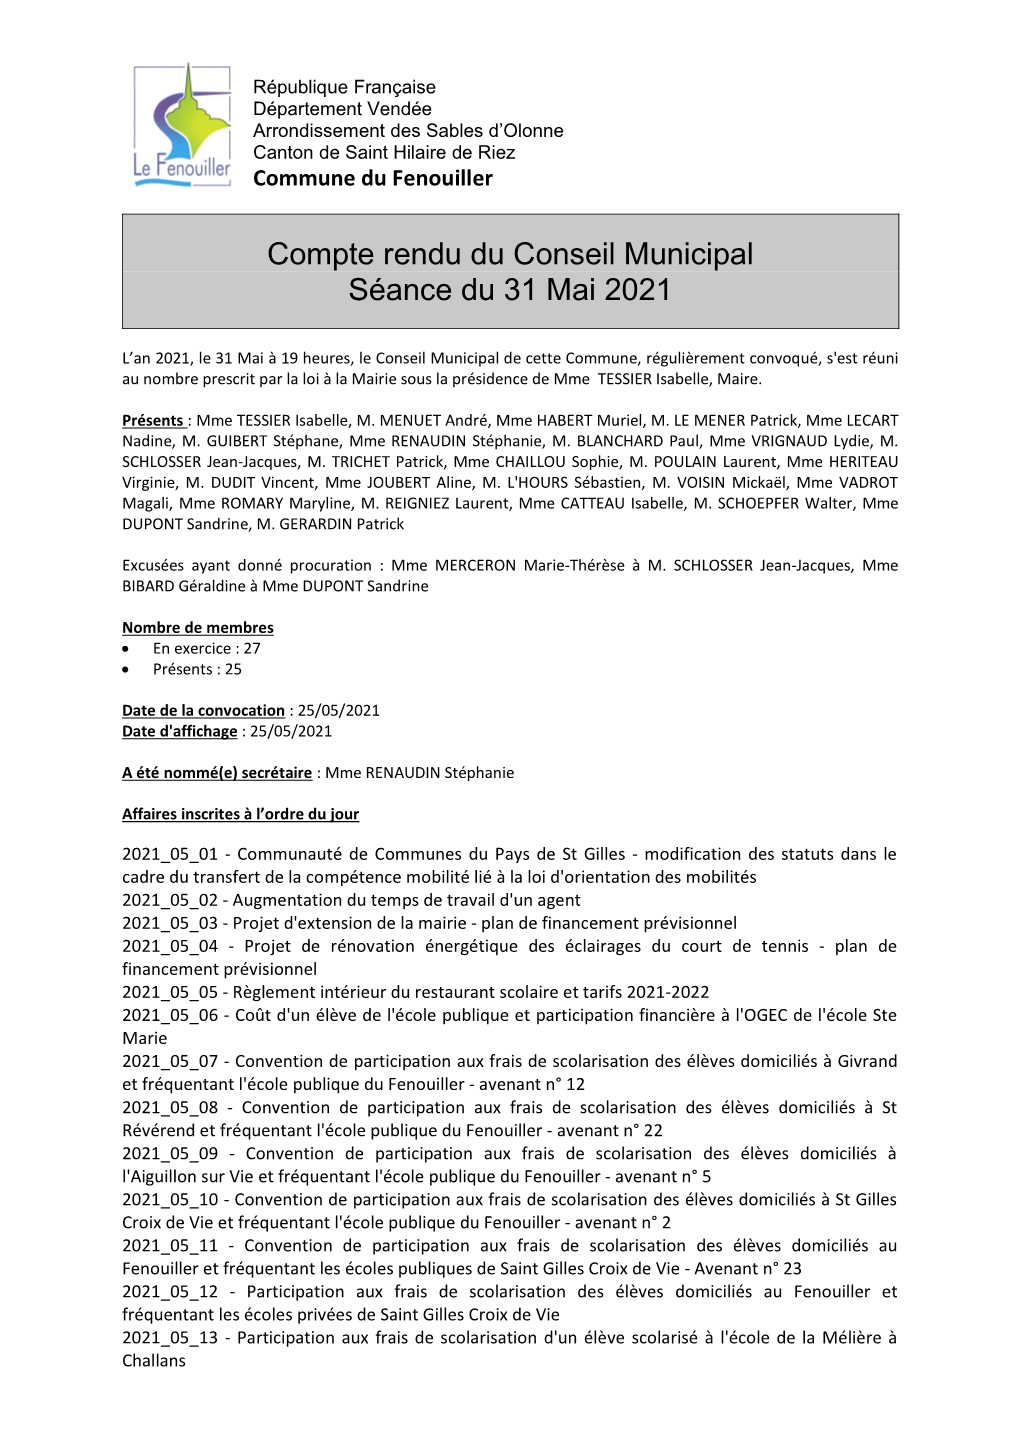 Compte Rendu Du Conseil Municipal Séance Du 31 Mai 2021